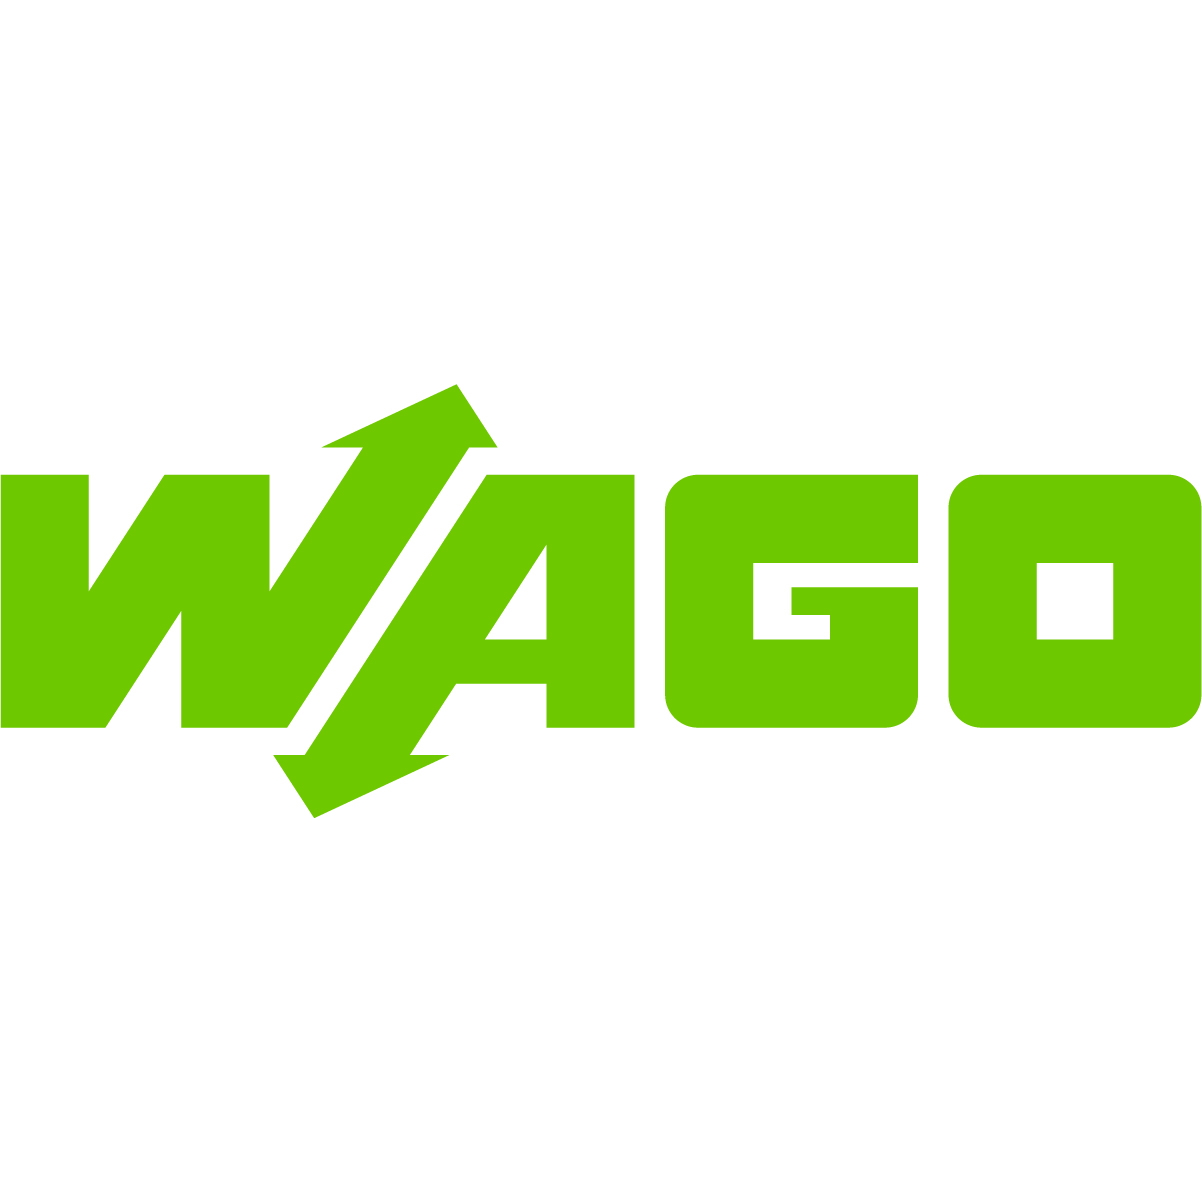 WAGO Logo main use green RGB 1